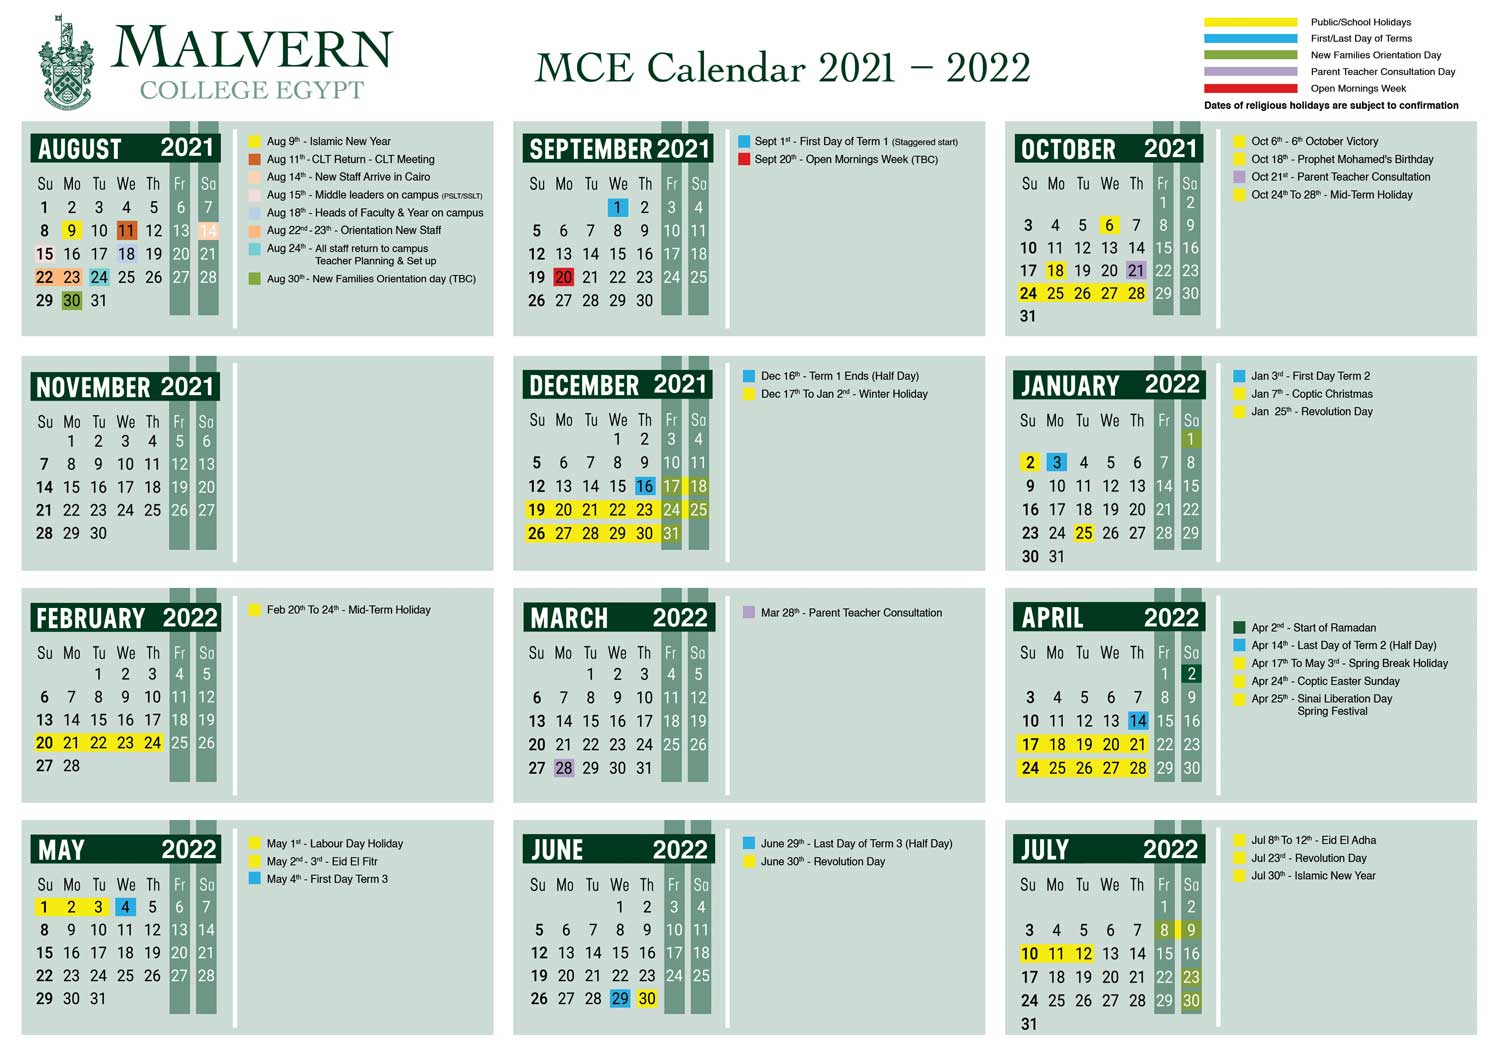 MCE Calendar 2021/2022 (Provisional Calendar)